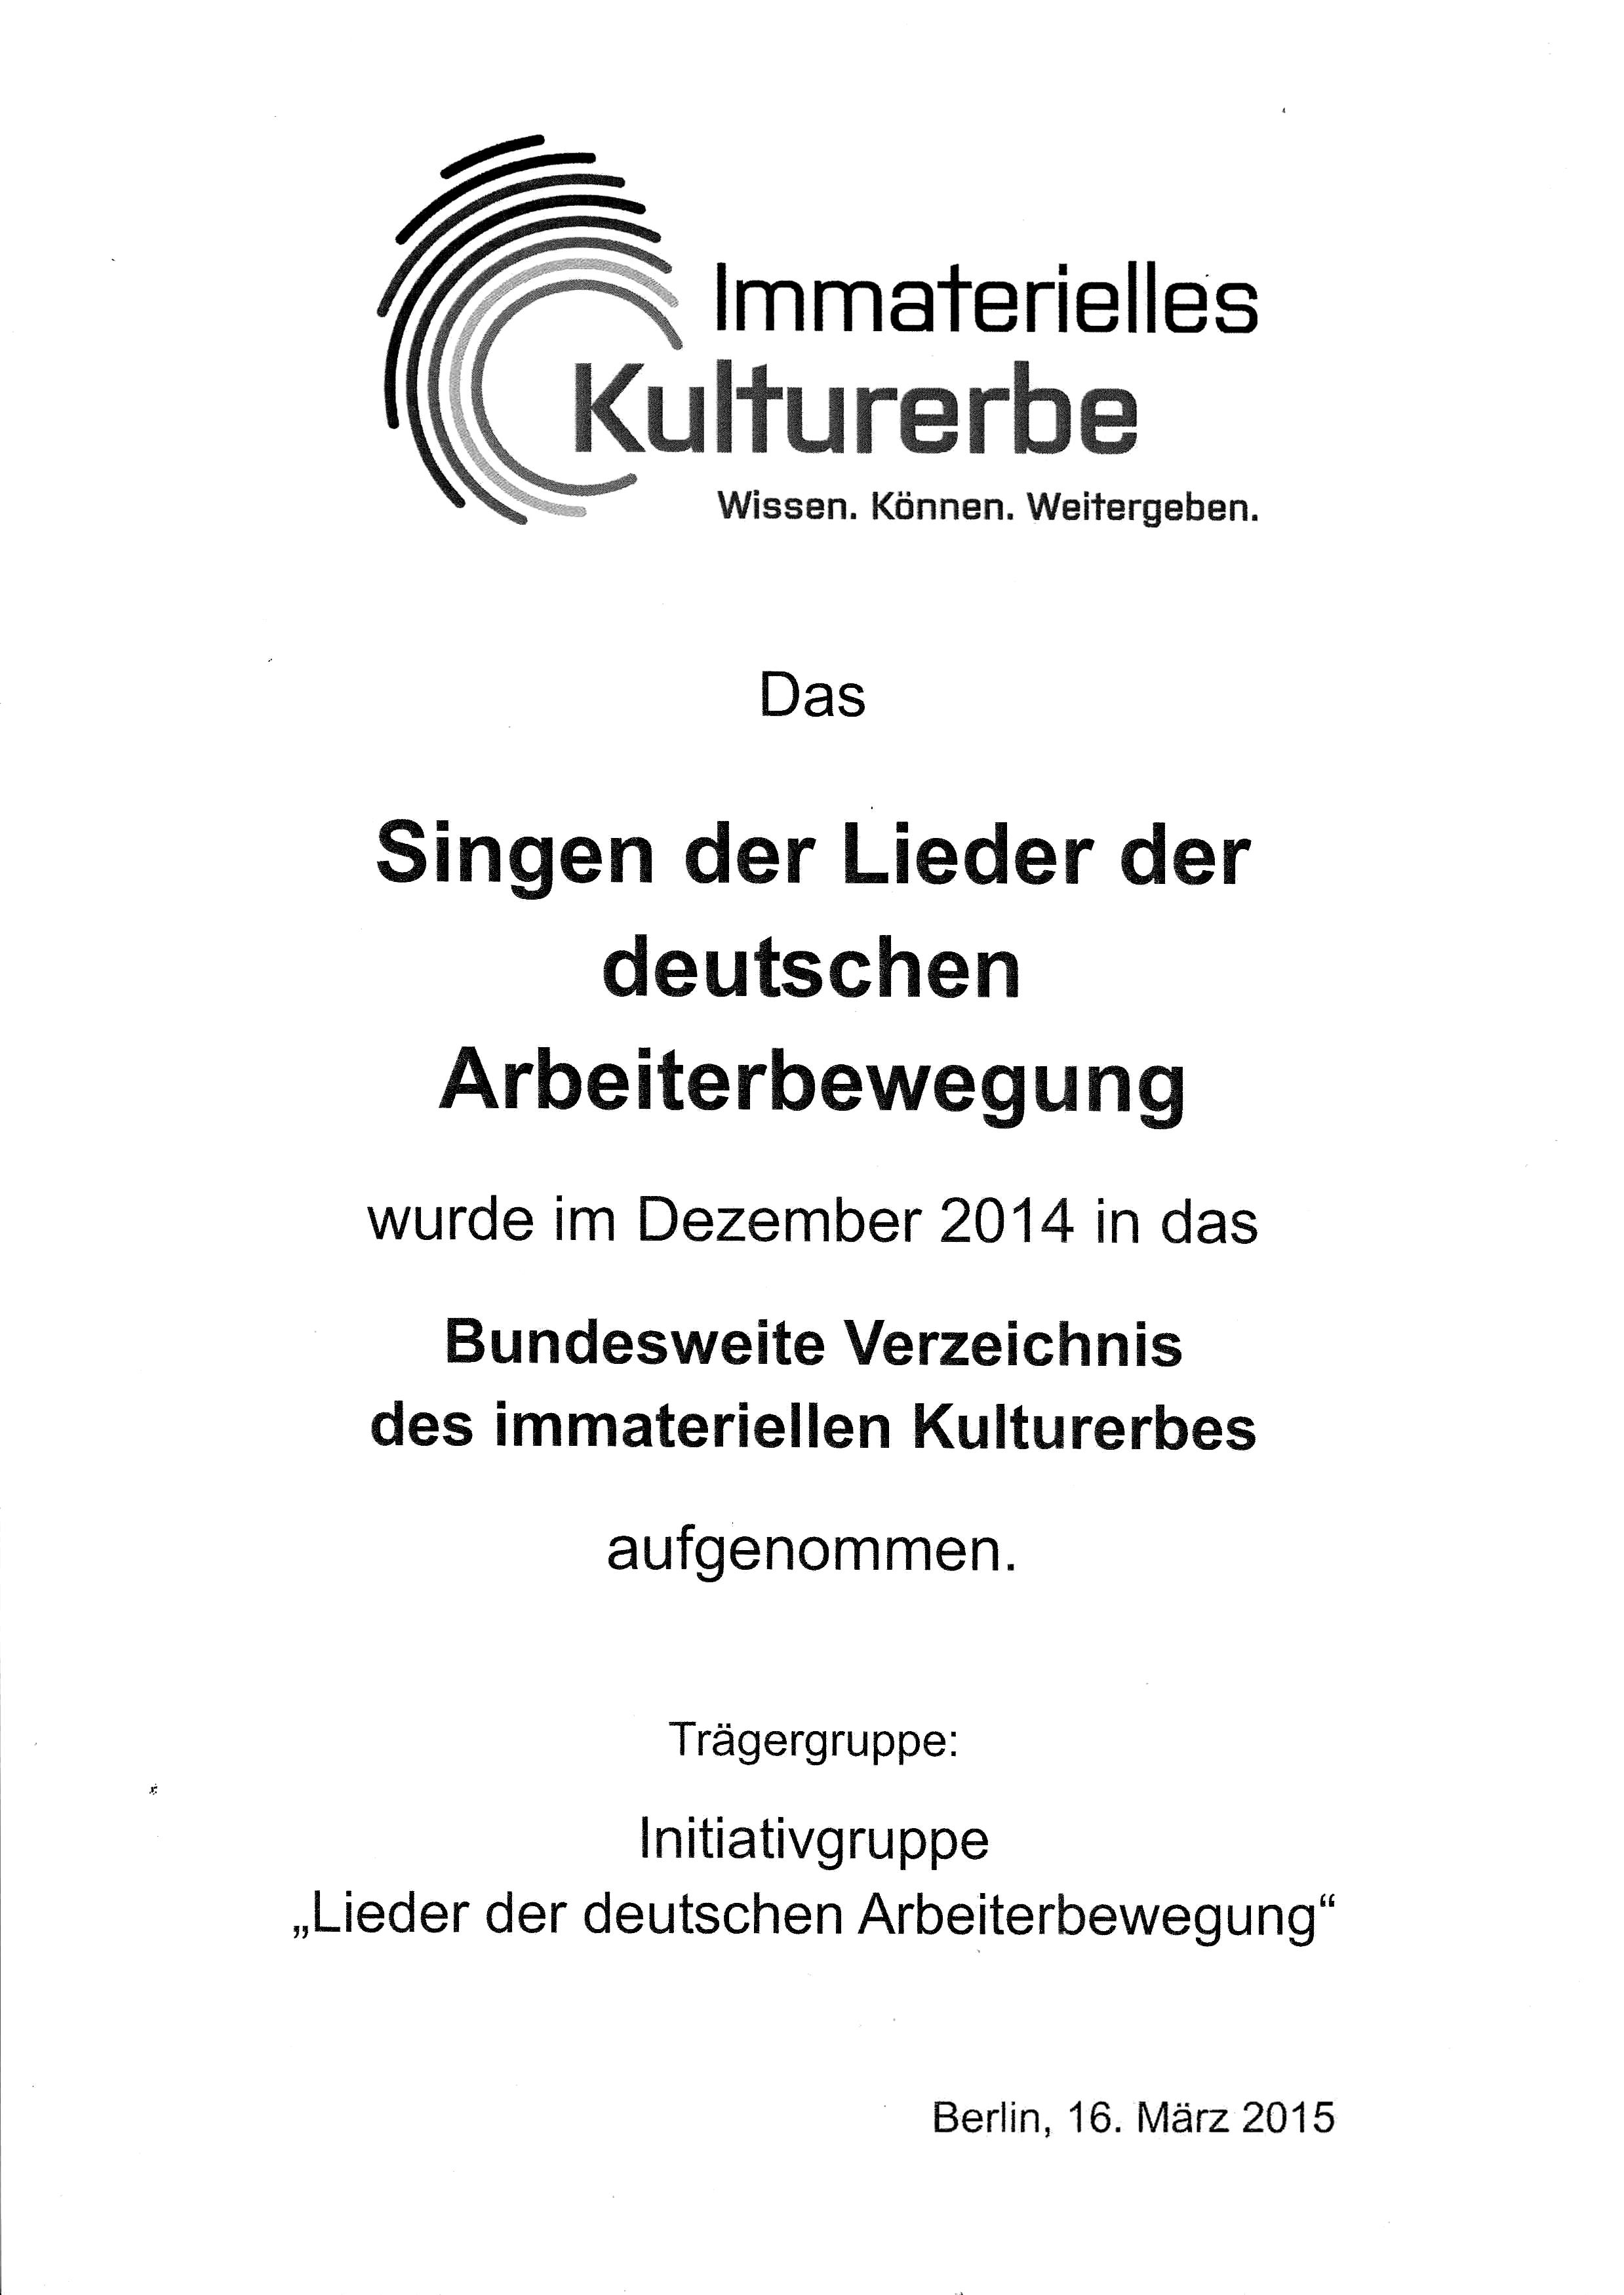 da229_S15_Kulturerbe-Urkunde.jpg